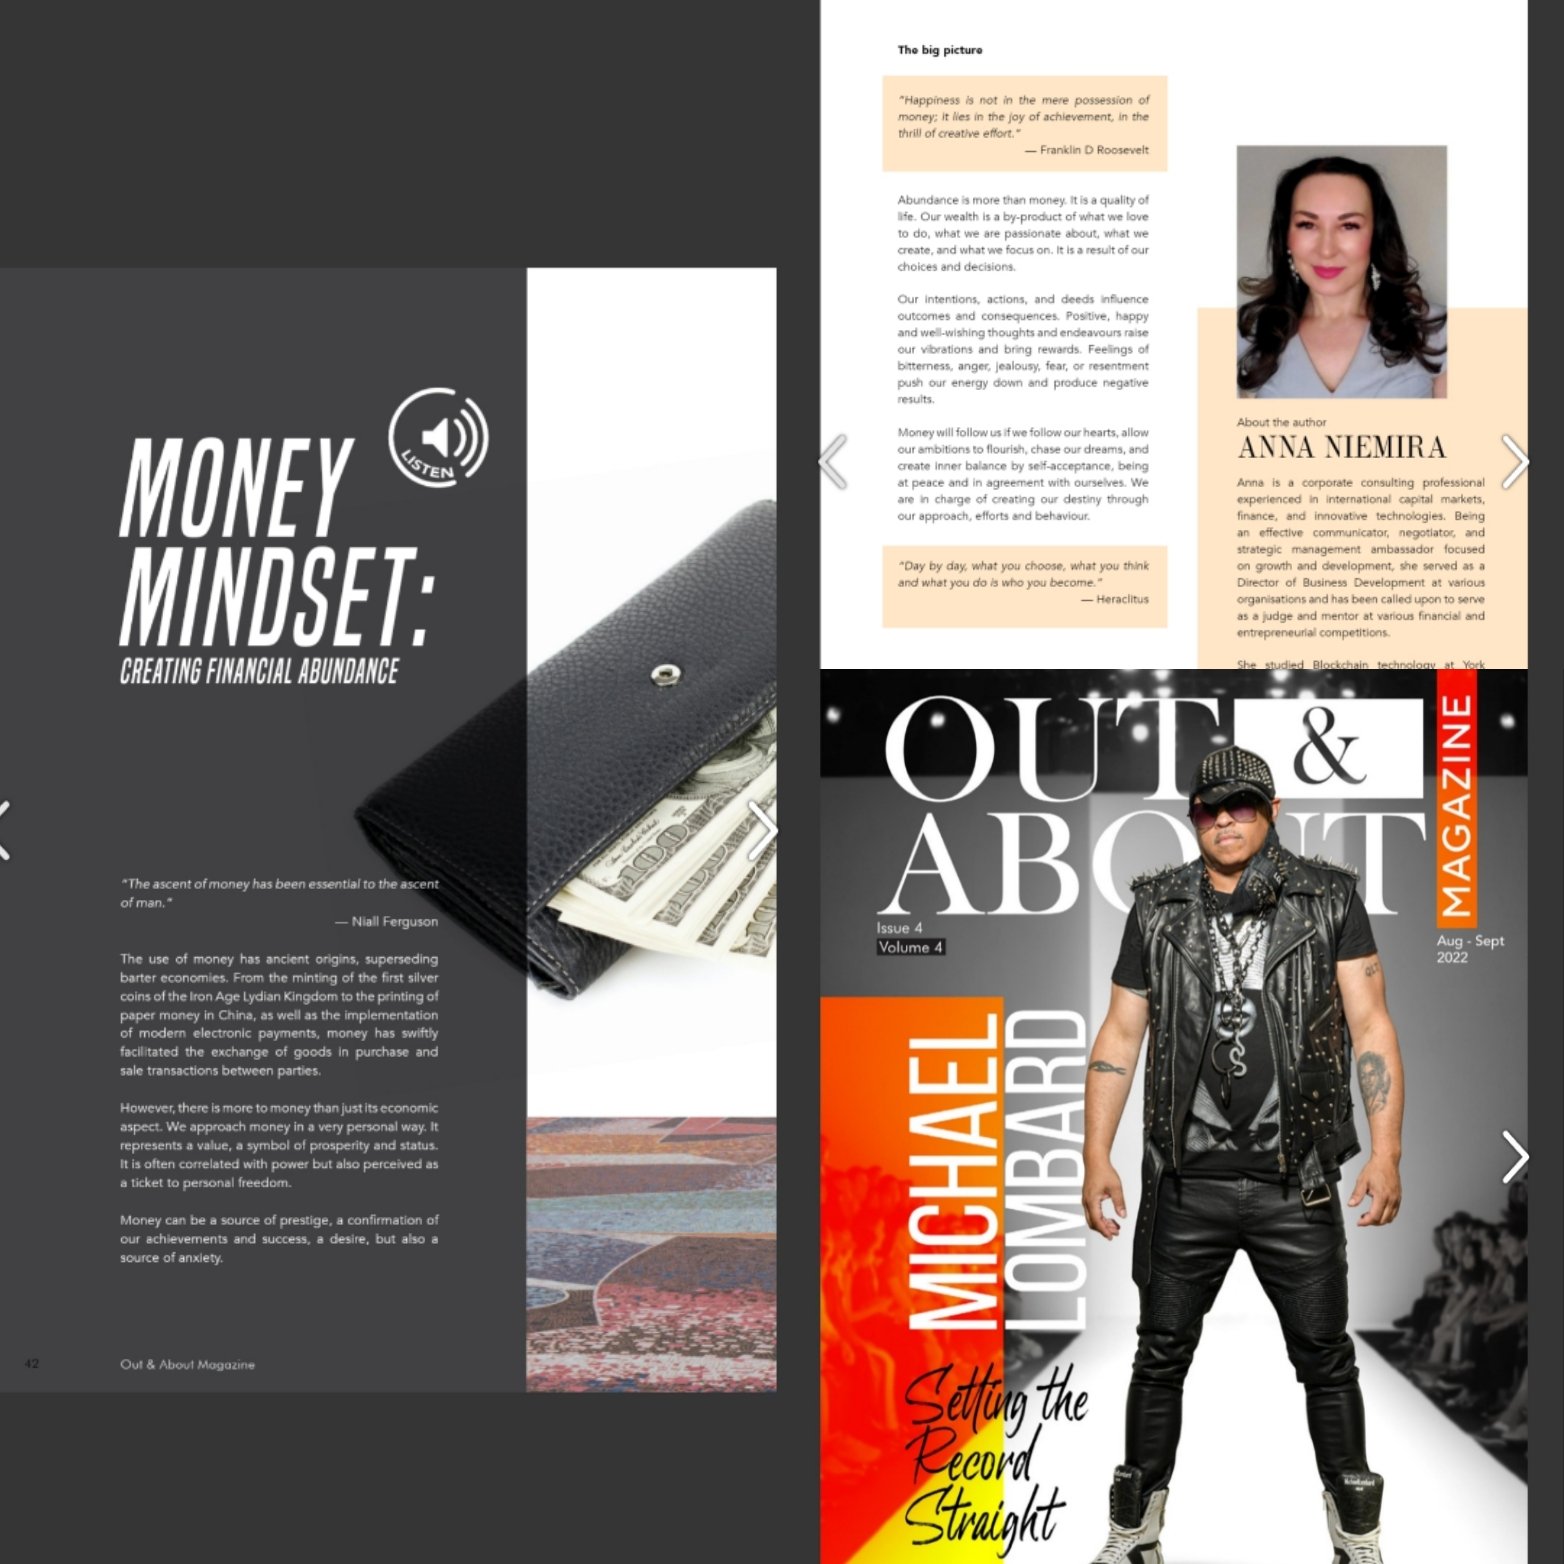 Money Mindset - Creating Financial Abundance